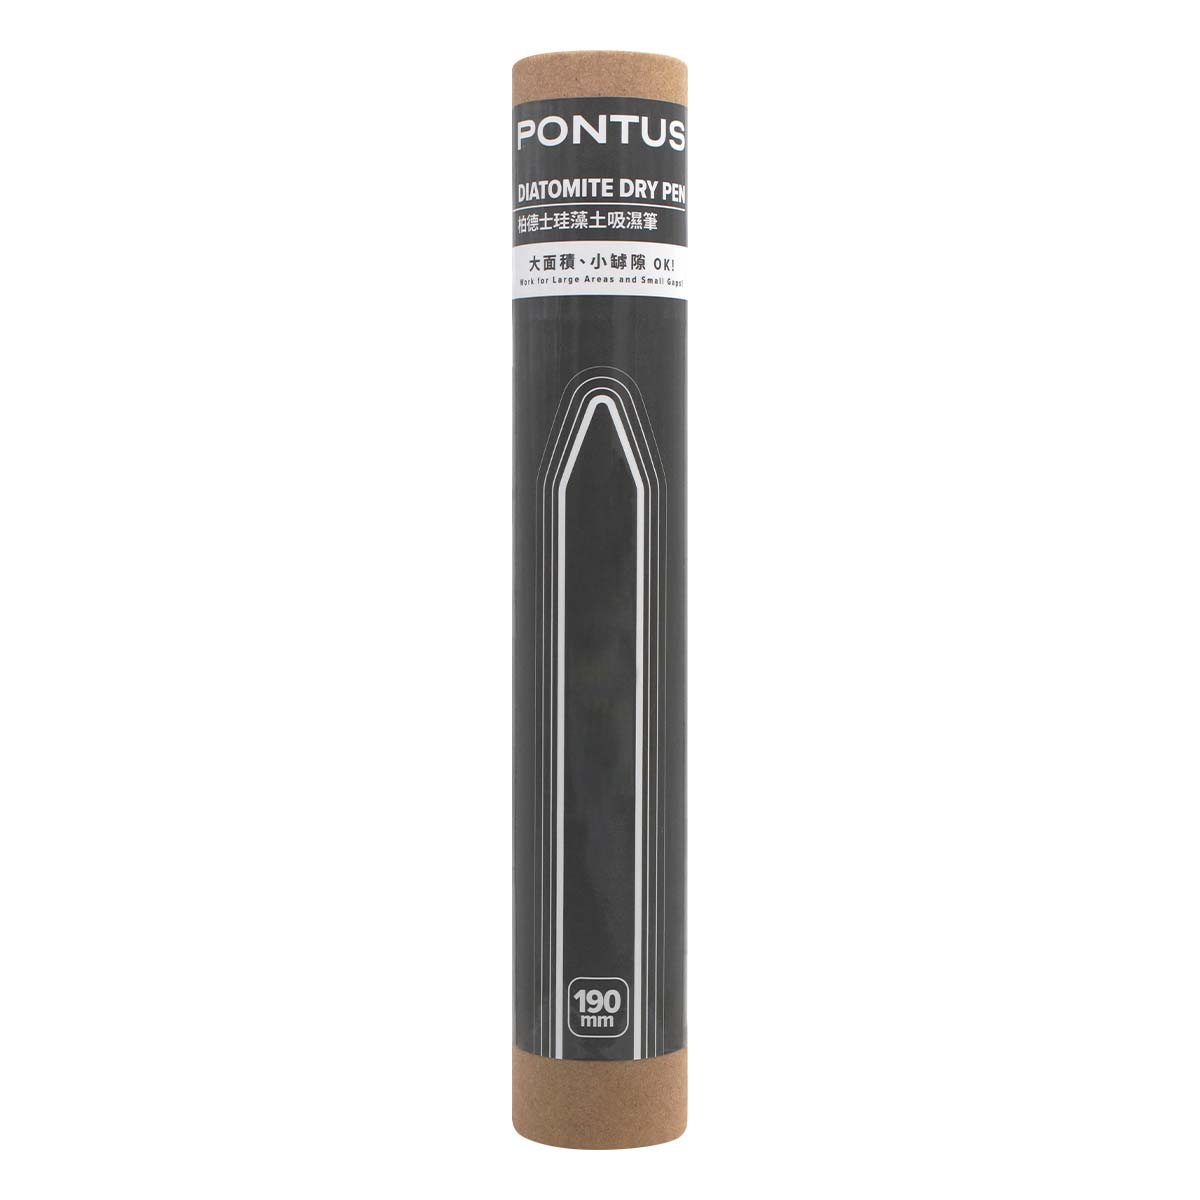 Pontus Diatomite Dry Pen (For male toys)-thumb_2